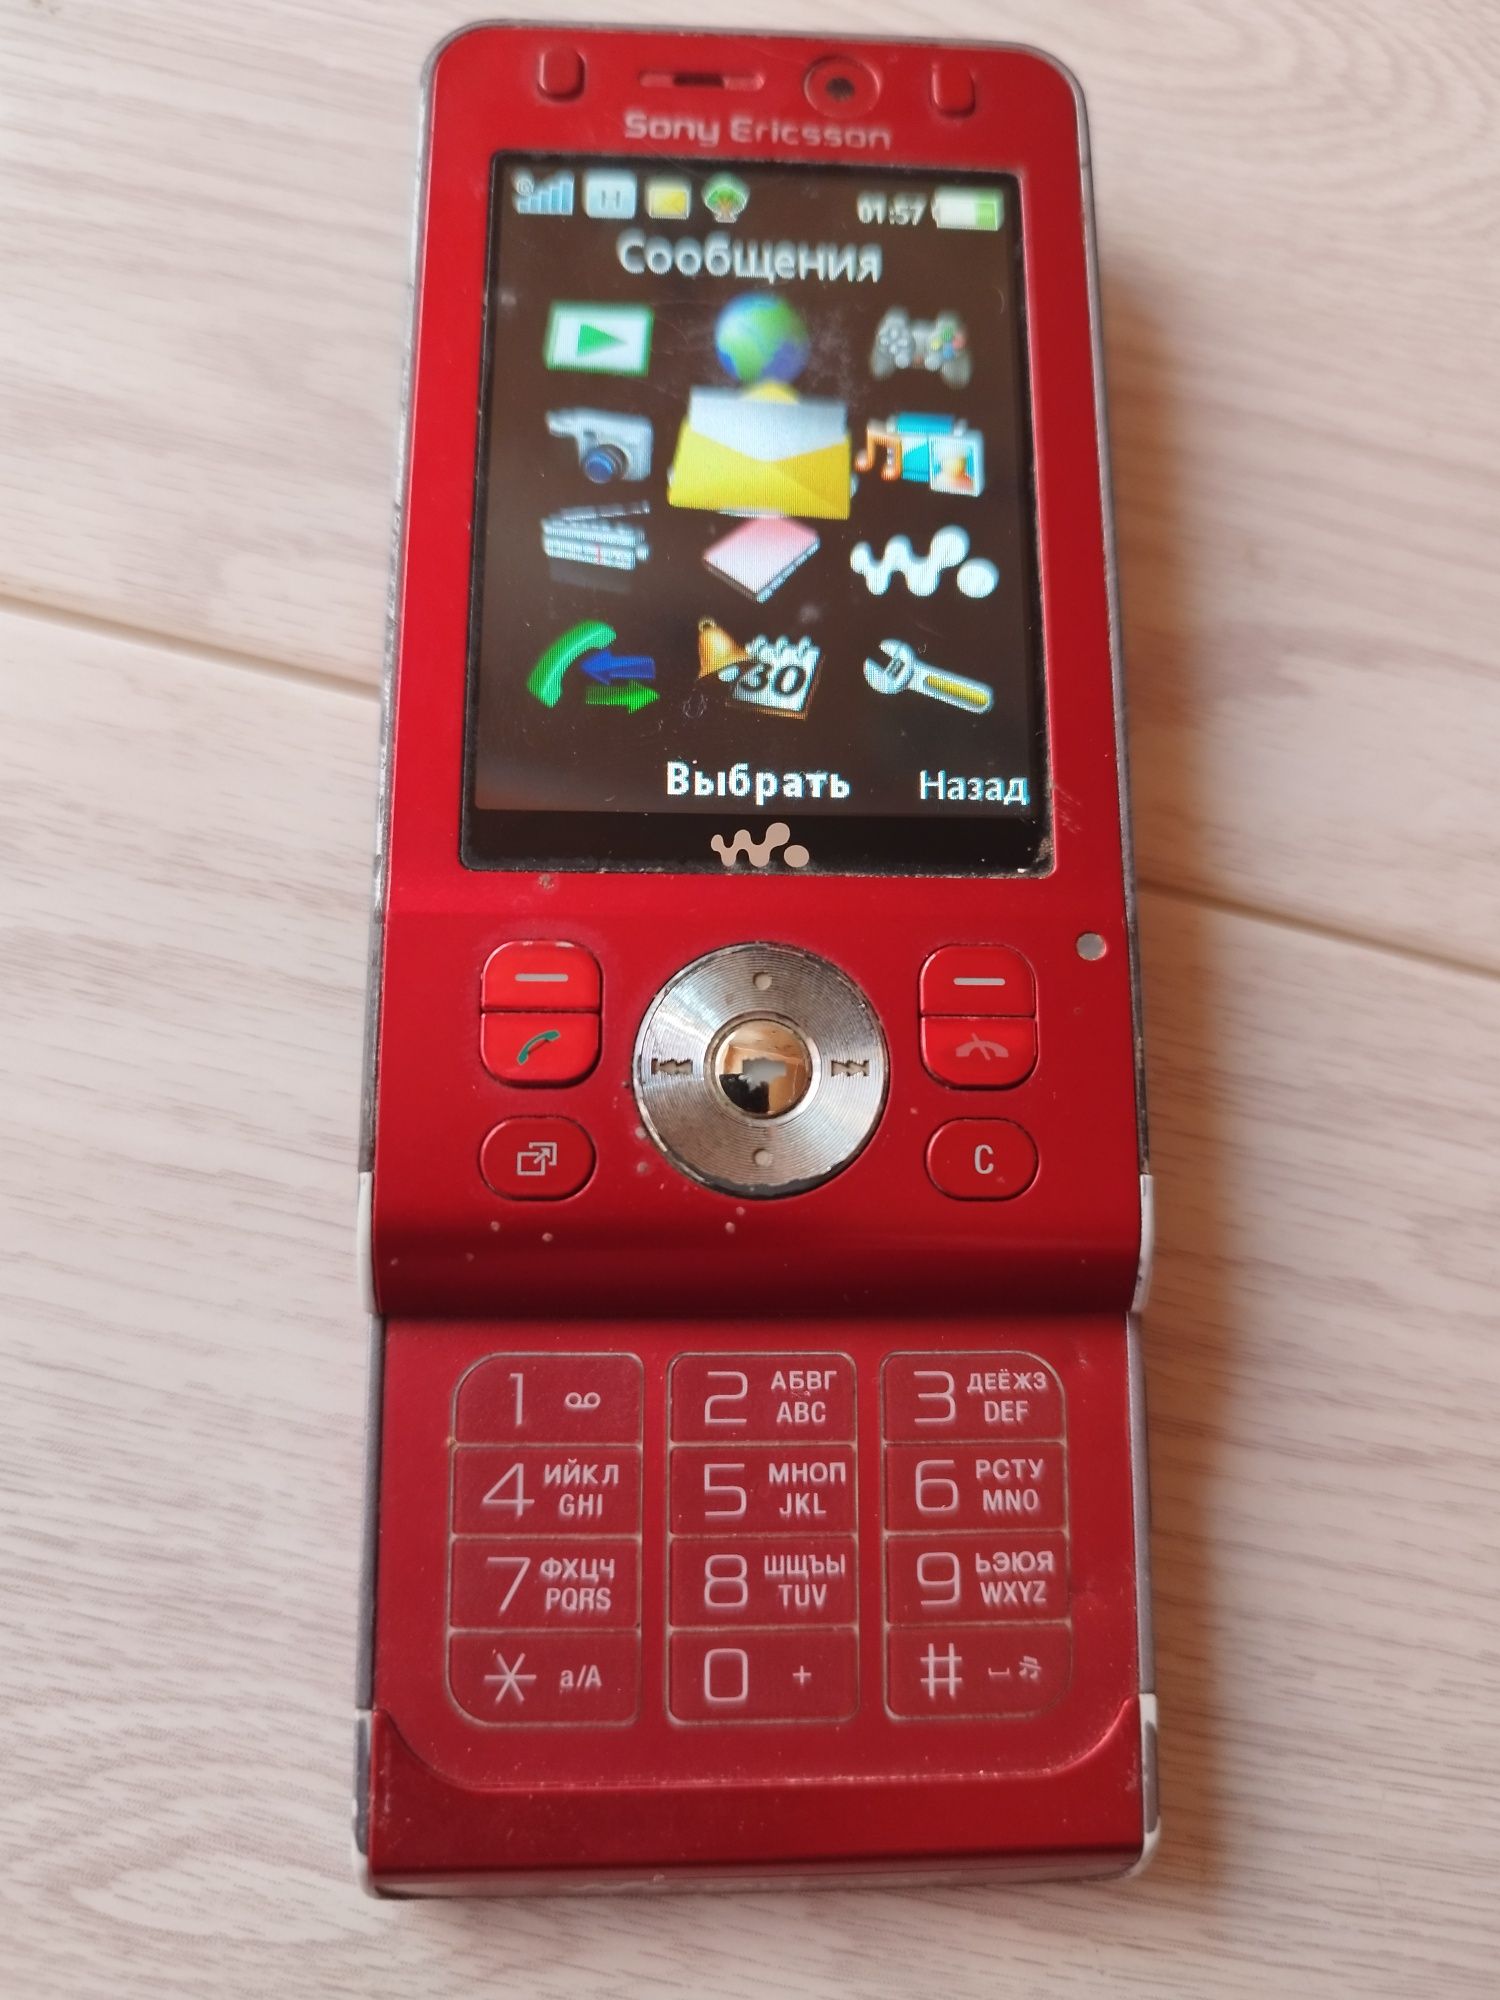 Sony Ericsson w910